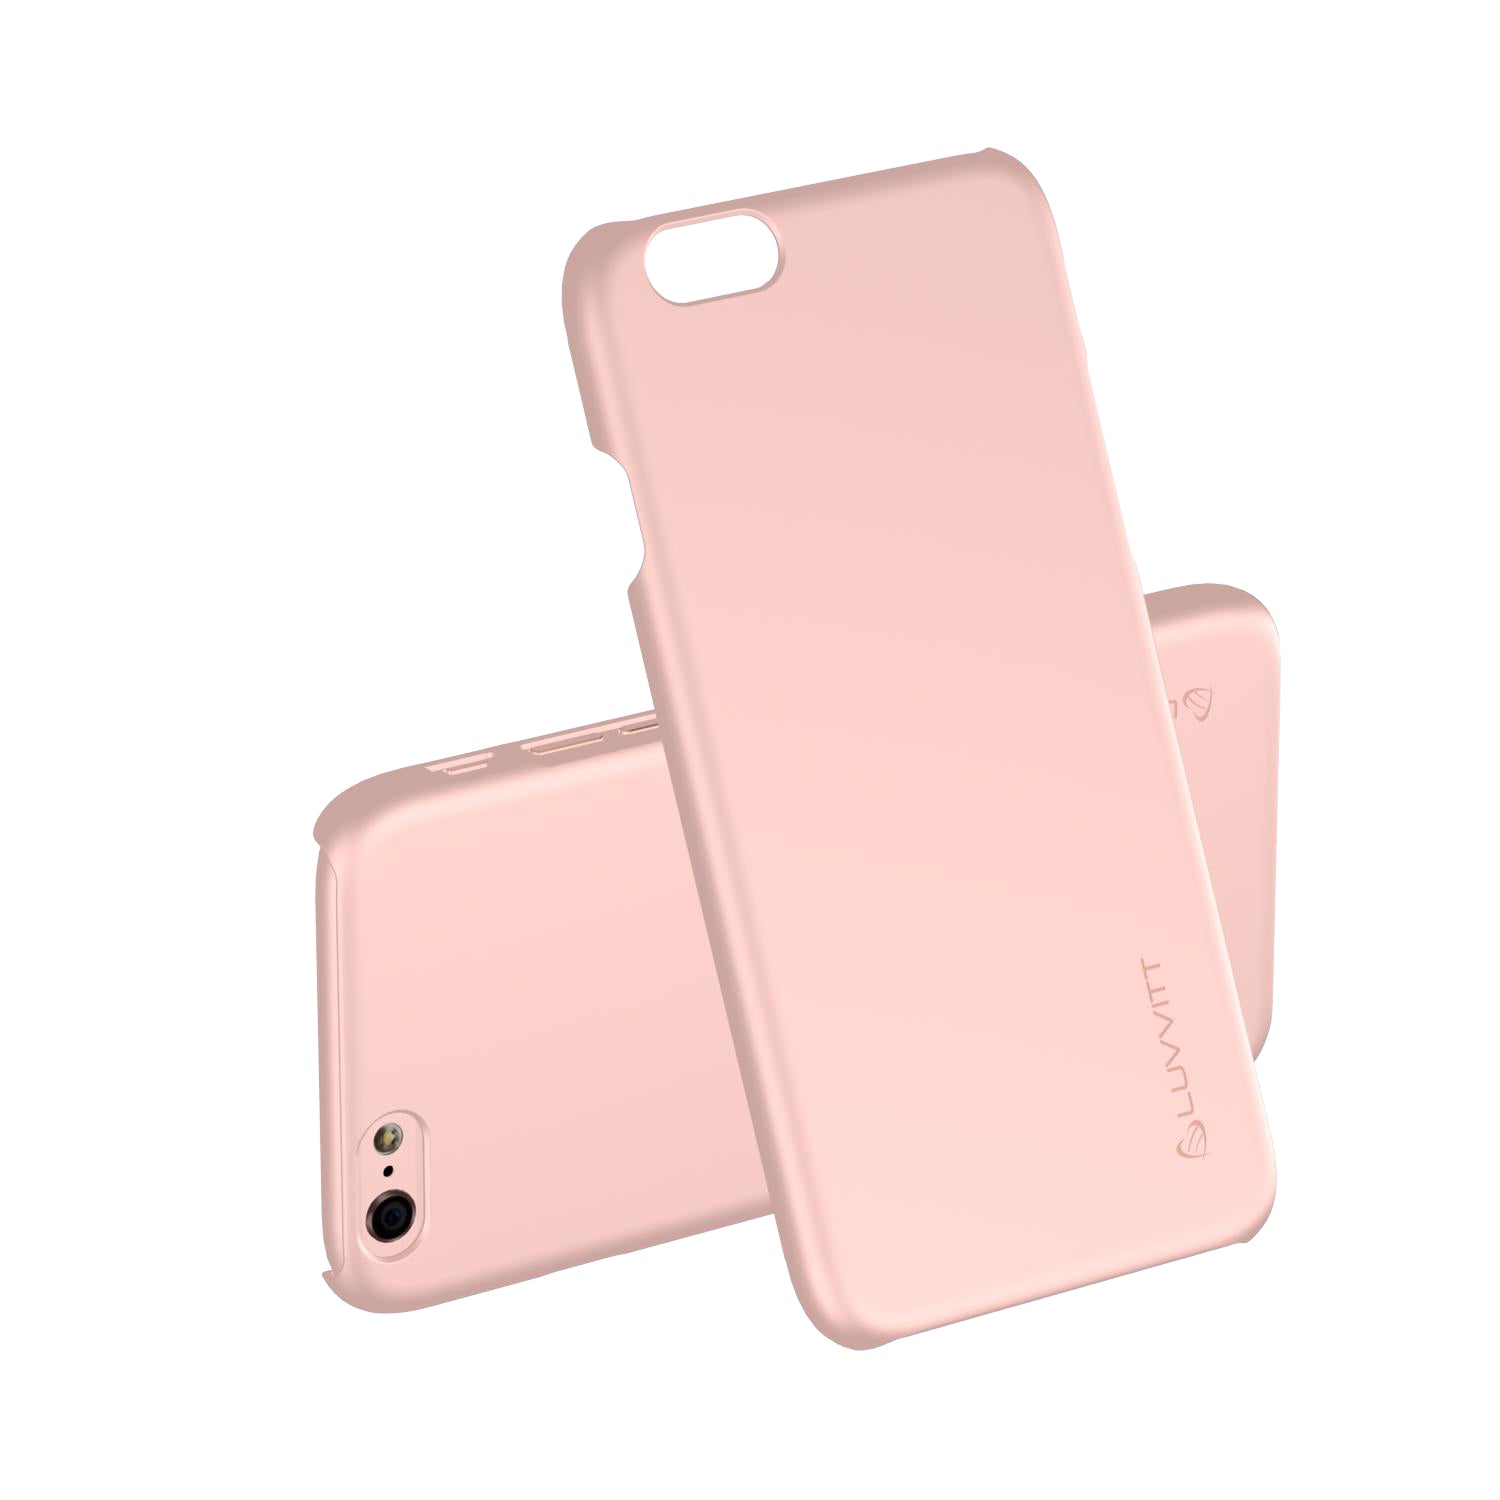 LUVVITT SVELTE Hard Slim Fit Premium Matte Case for iPhone 6/6s - Rose Gold